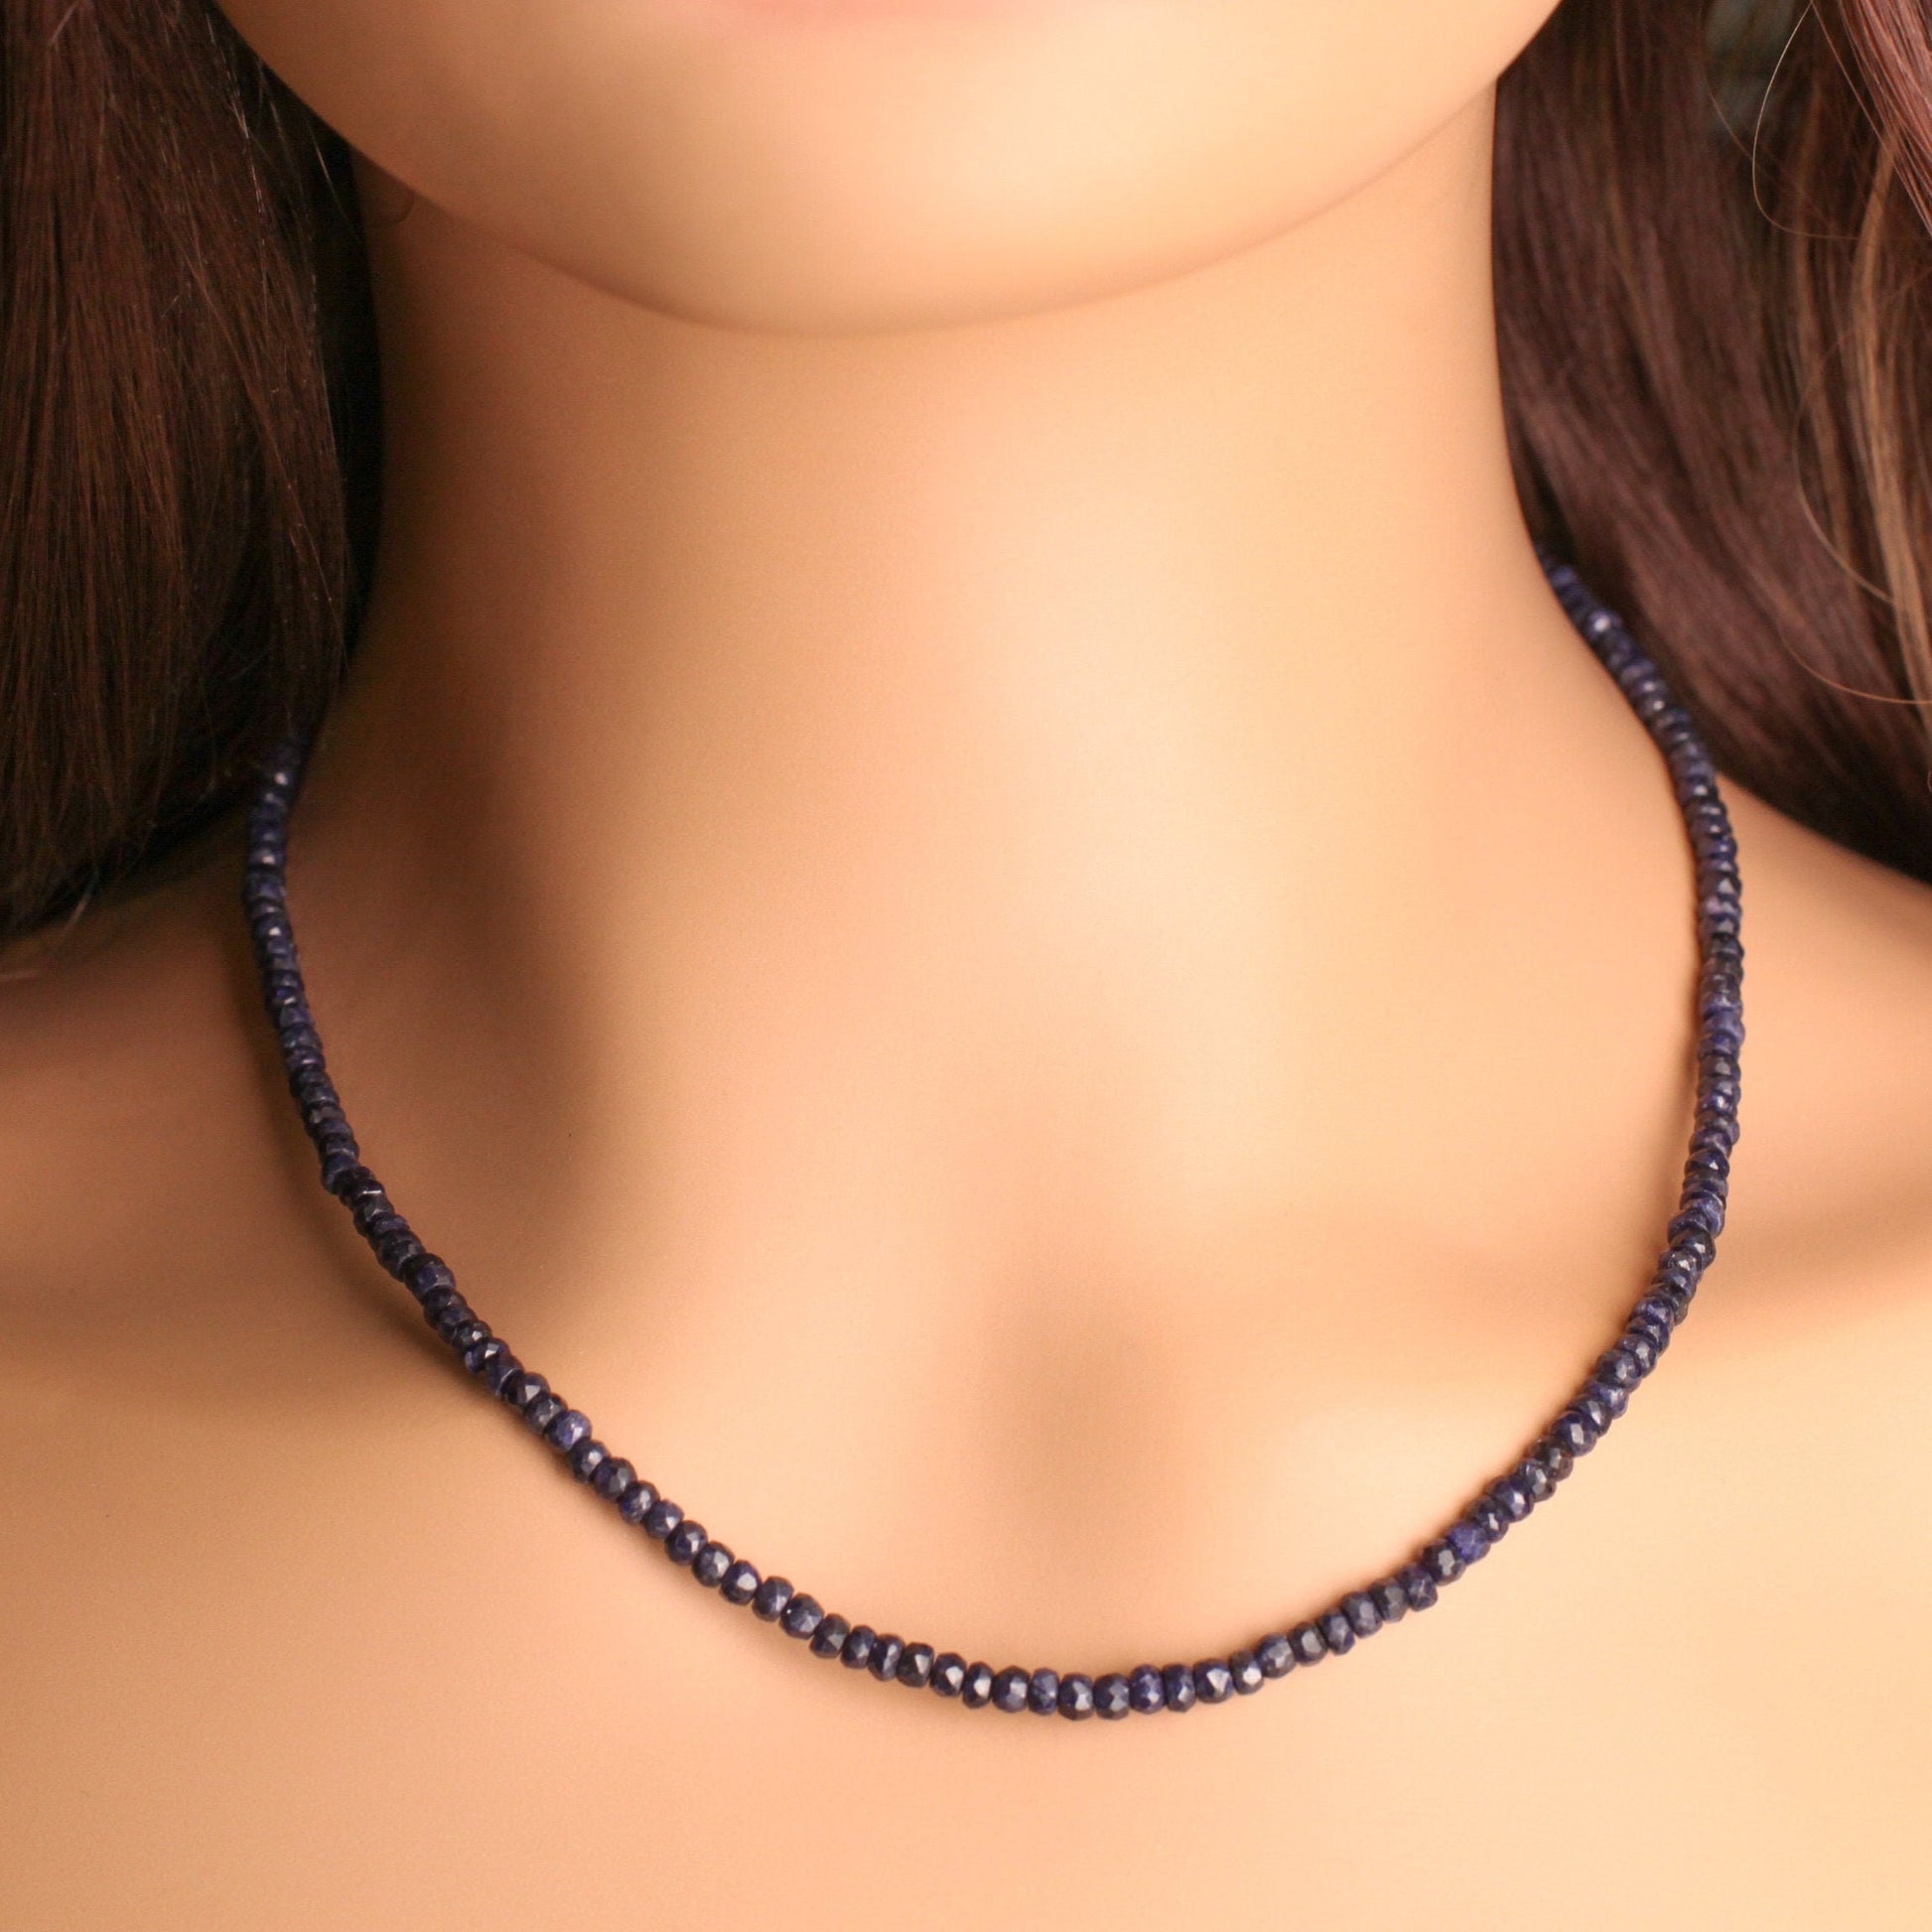 Genuine Sapphire Faceted Roundel 4mm Dark Blue Sapphire Gemstone Statement Necklace with Fancy Rhodium Silver lobster clasp